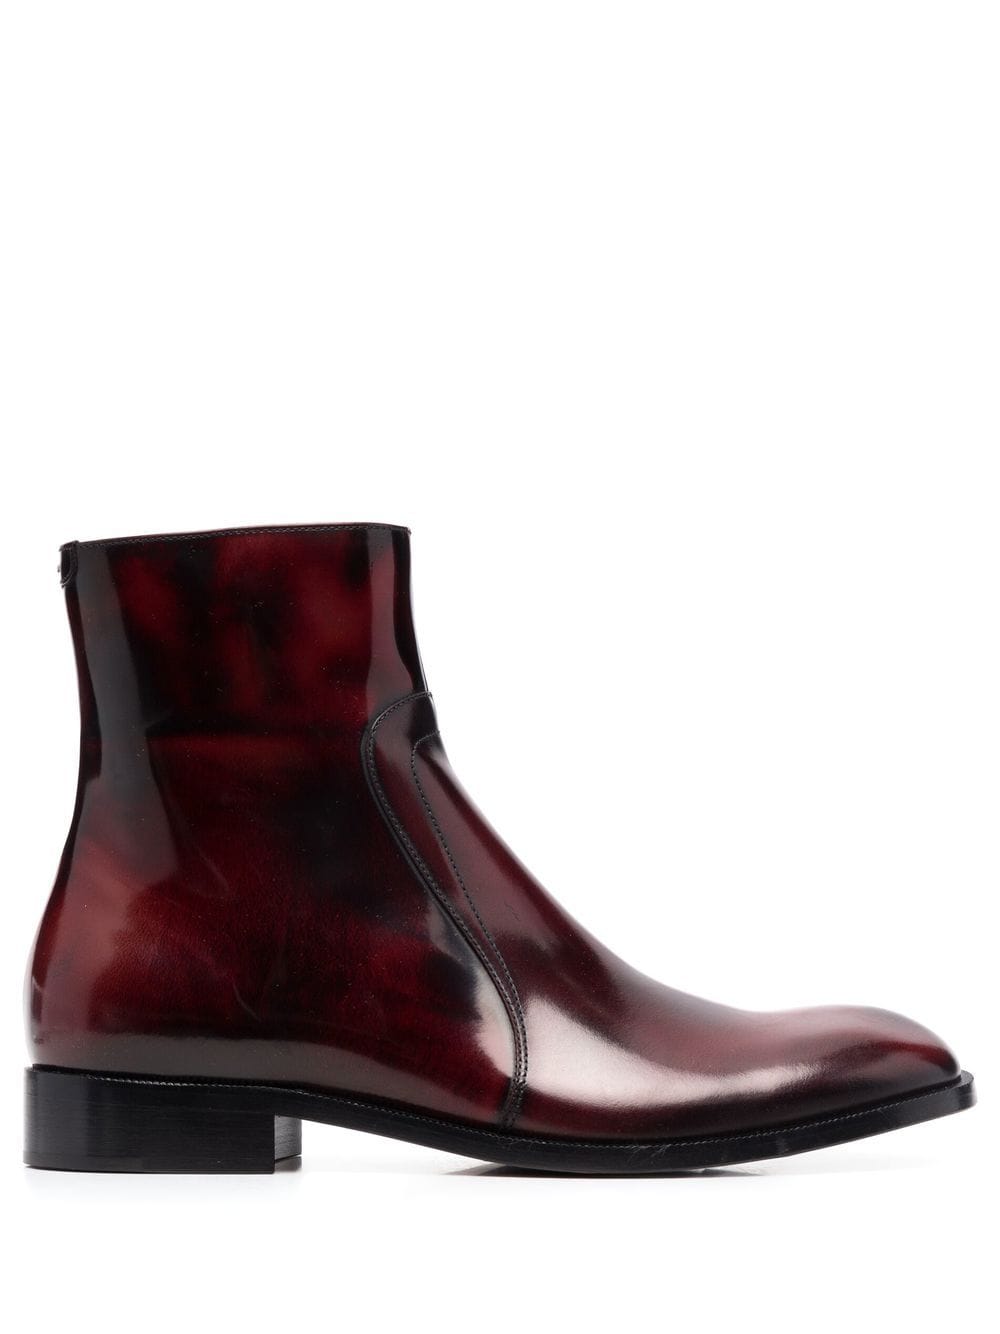 Image 1 of Maison Margiela waxed leather ankle boots